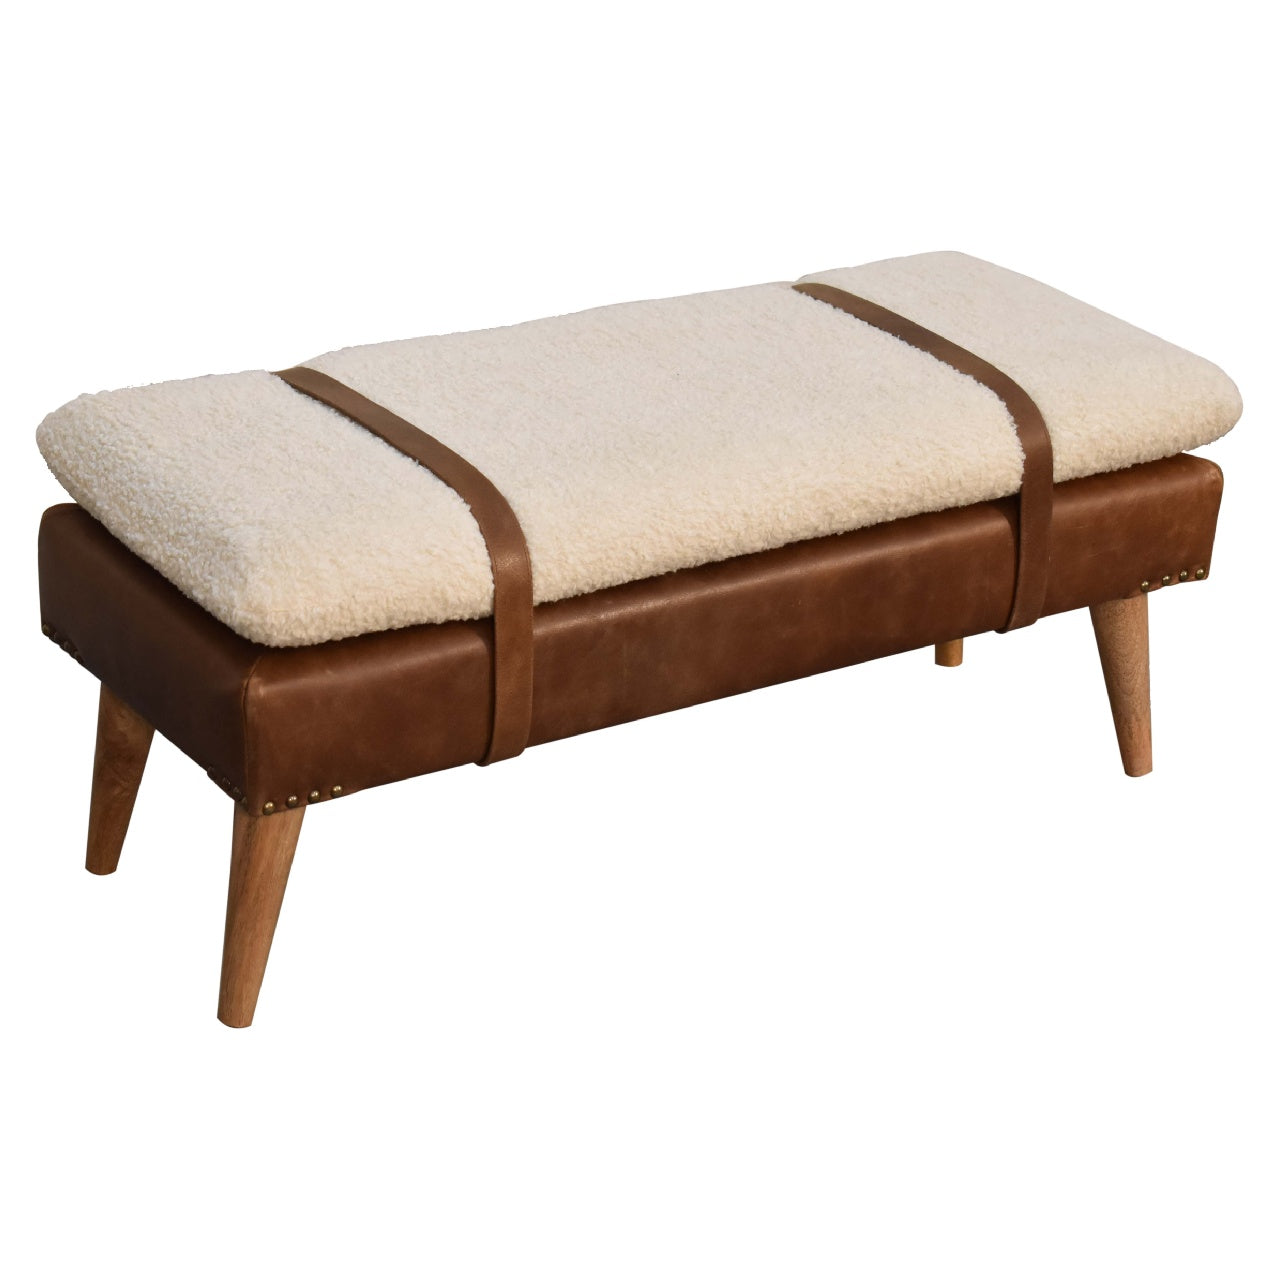 Mini Oak-ish Rounded Bedside Table